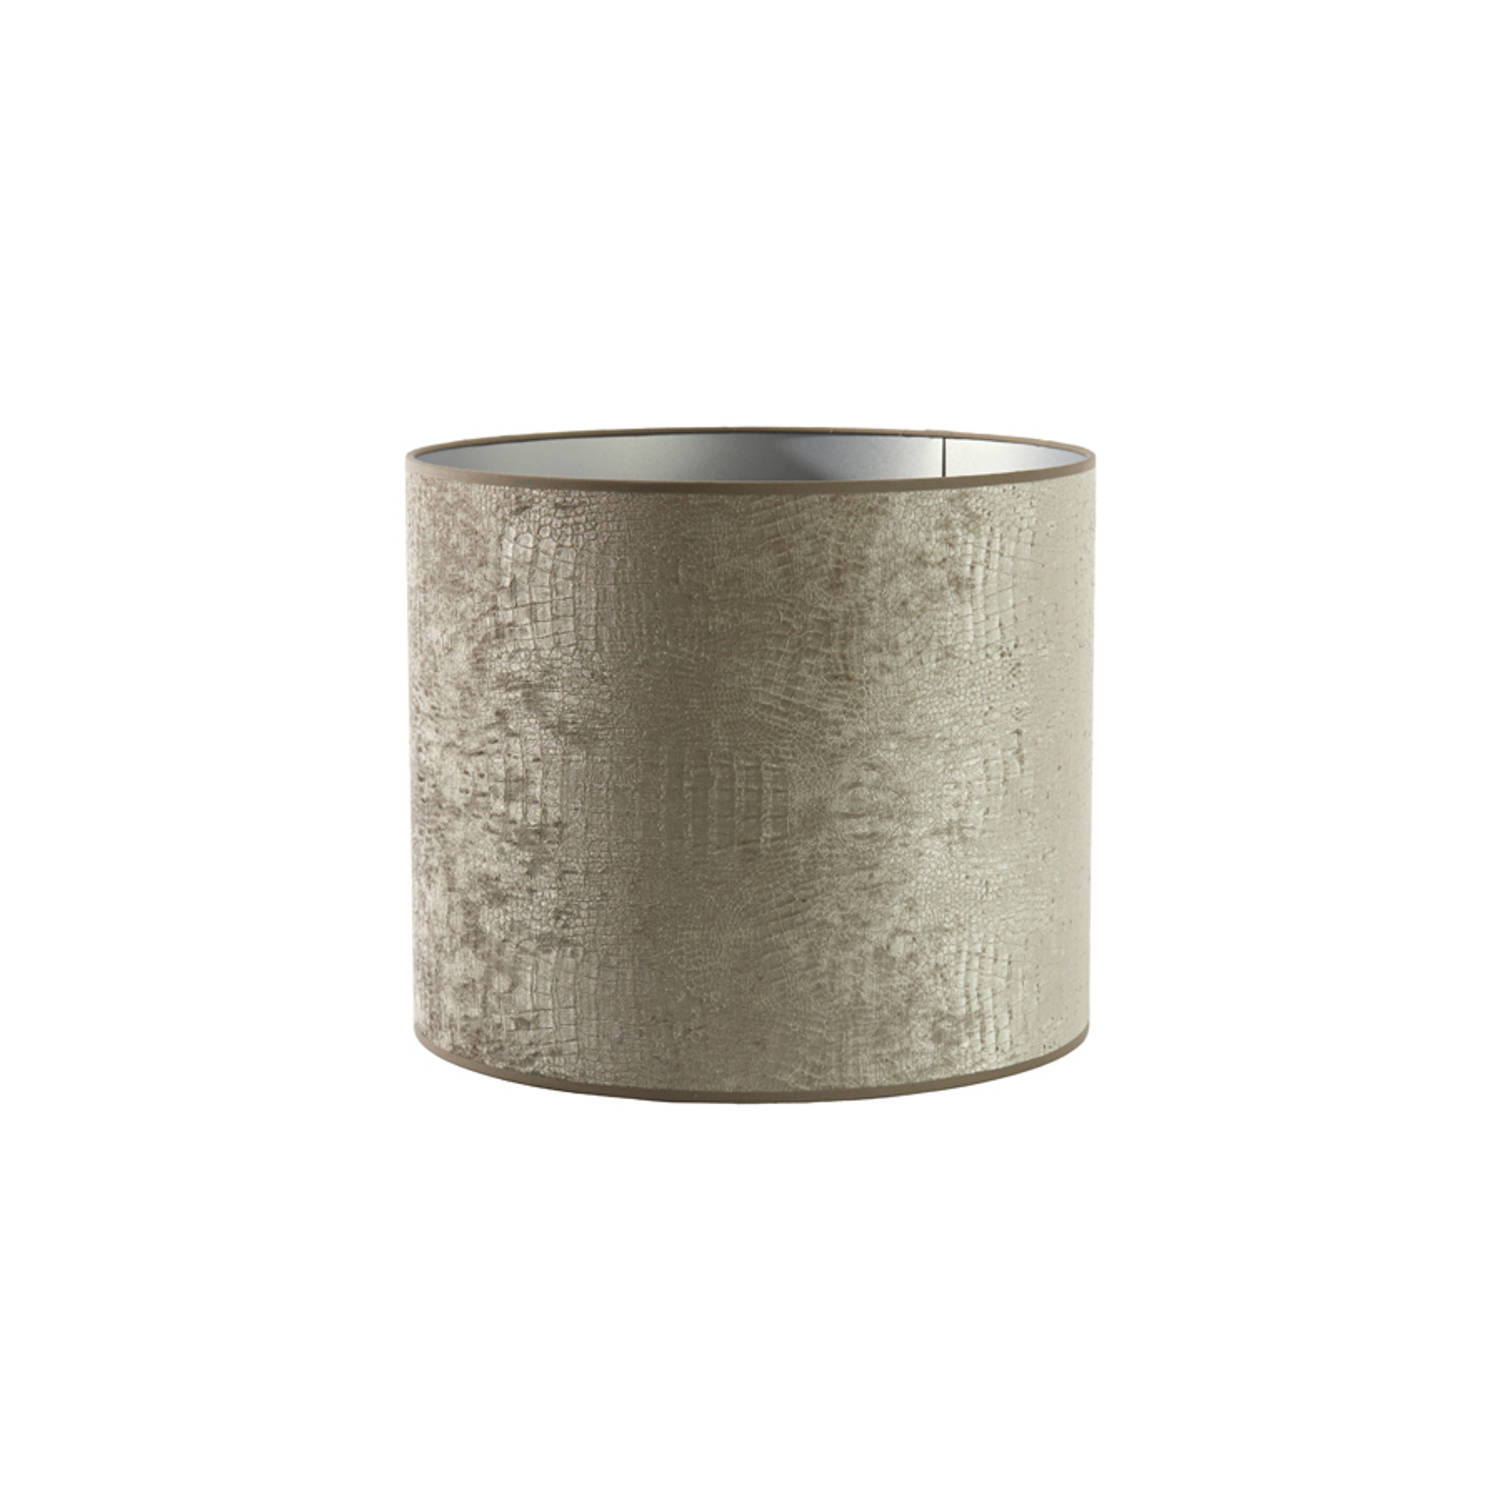 Kap cilinder 40-40-35 cm CHELSEA velours zilver Light & Living